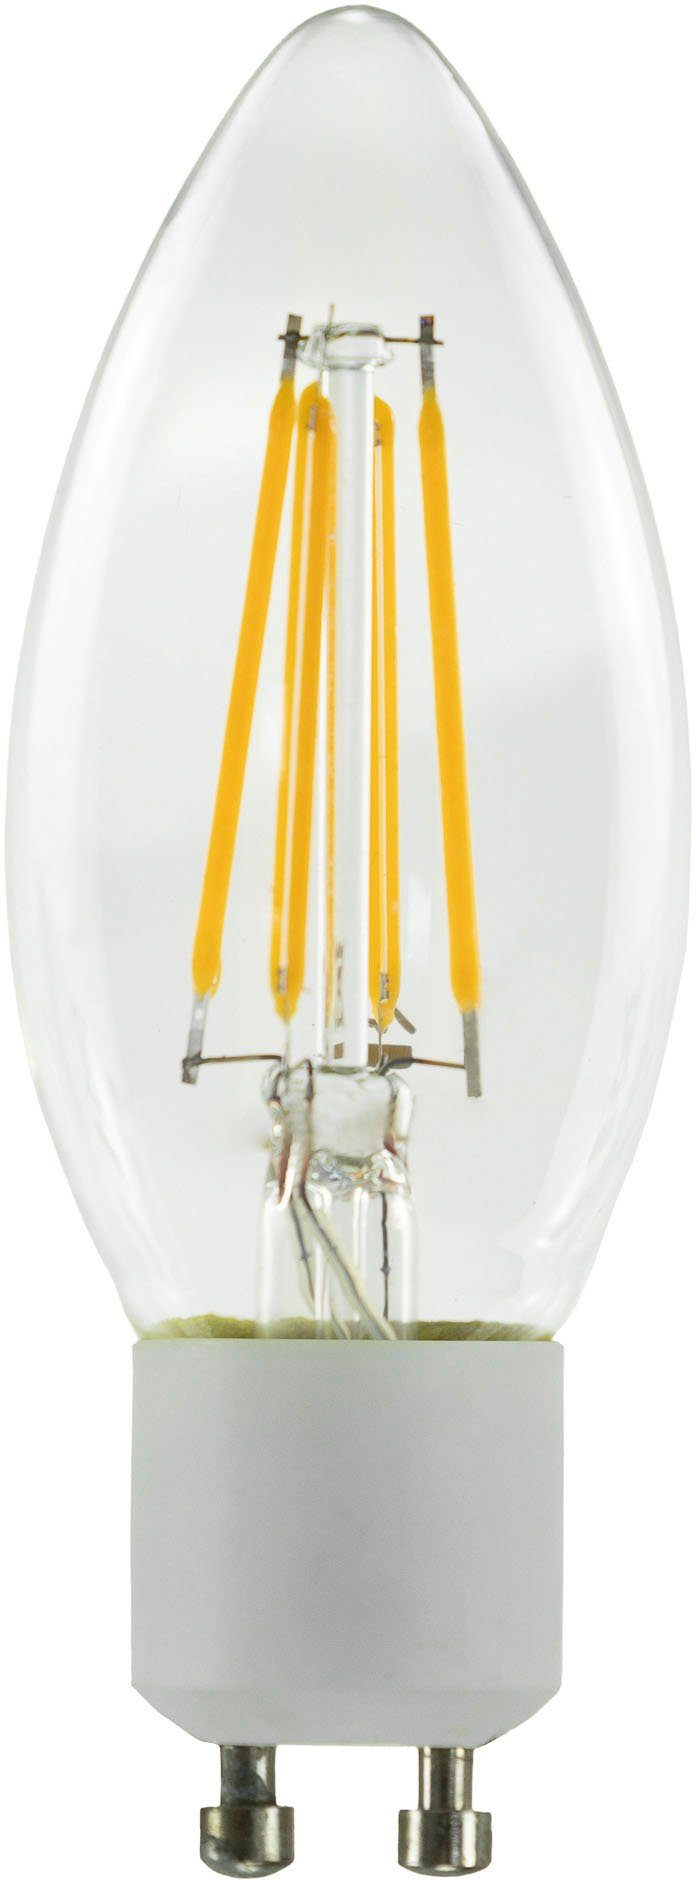 SEGULA LED-Leuchtmittel LED Kerze - GU10, GU10, 1 St., Warmweiß, LED Kerze - GU10, 2700K, klar, 3,2W, CRI 90, dimmbar